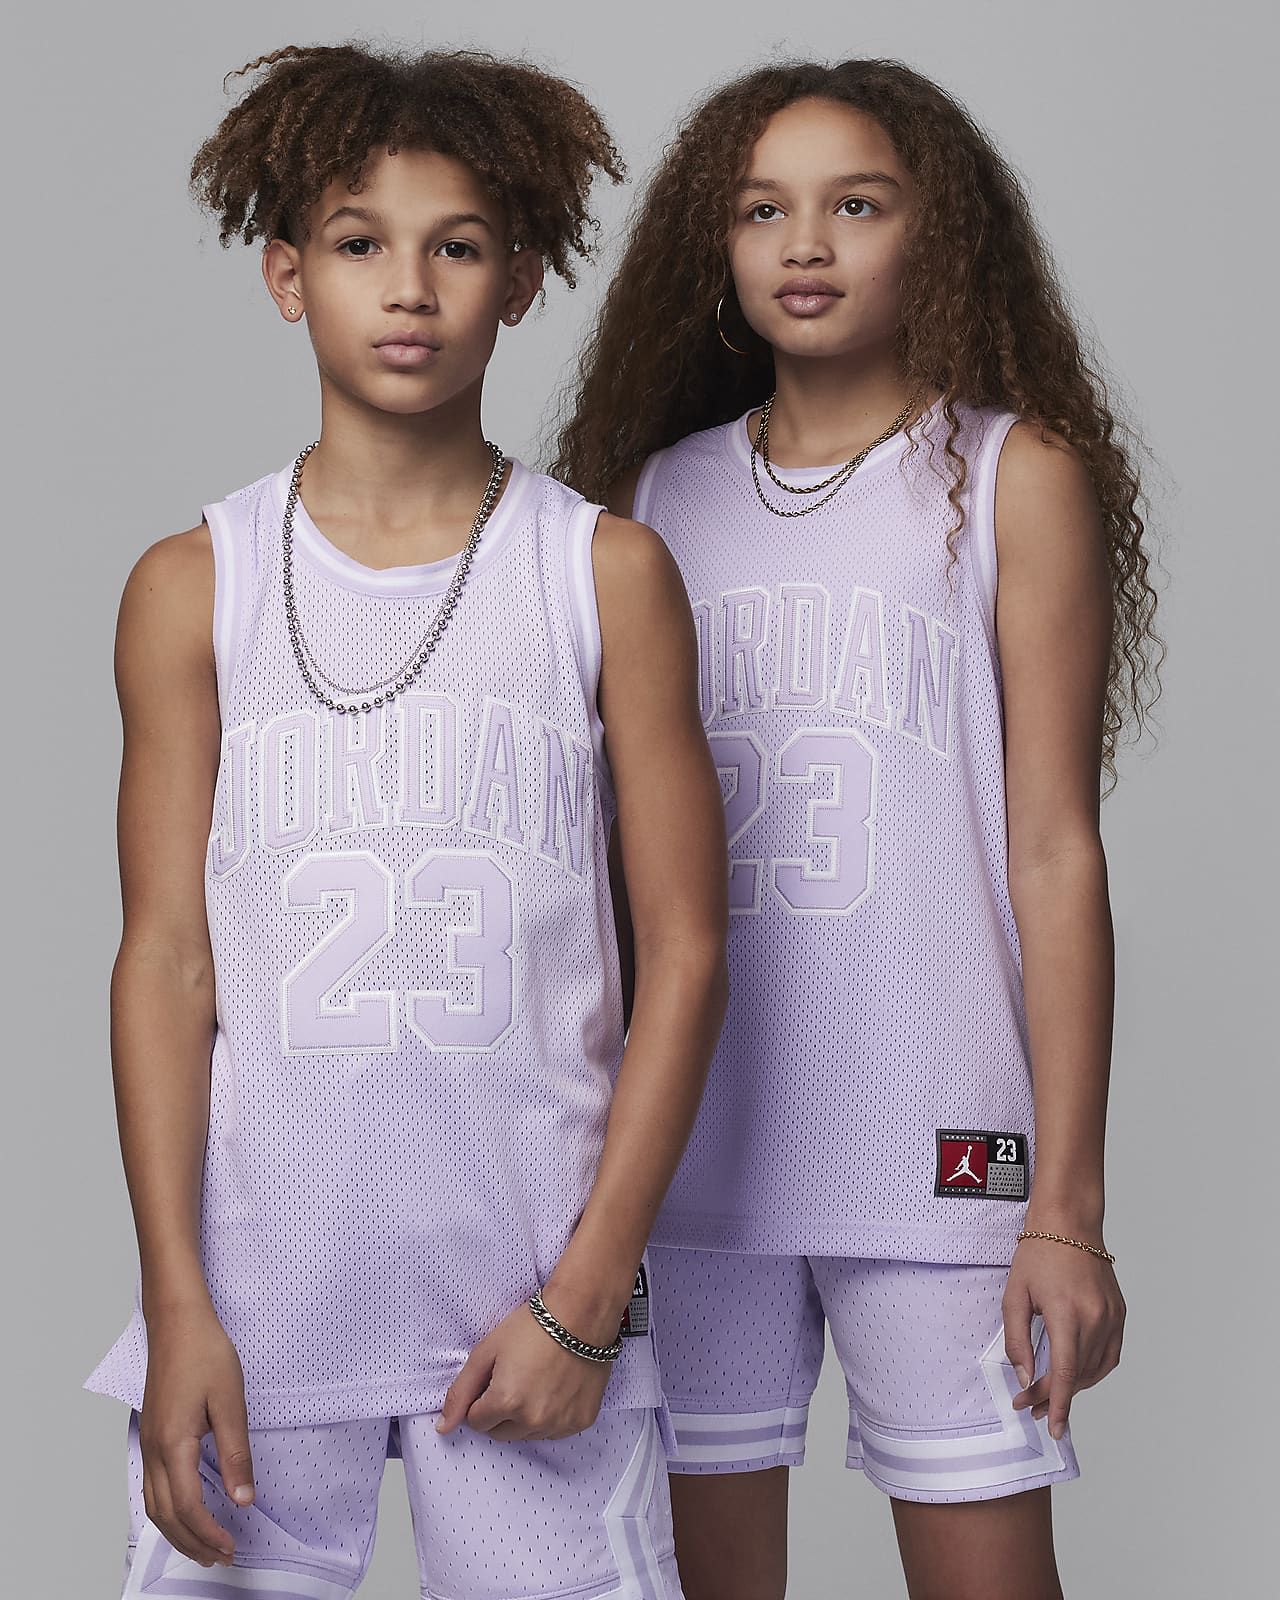 Jordan 23 Jersey | Nike (US)